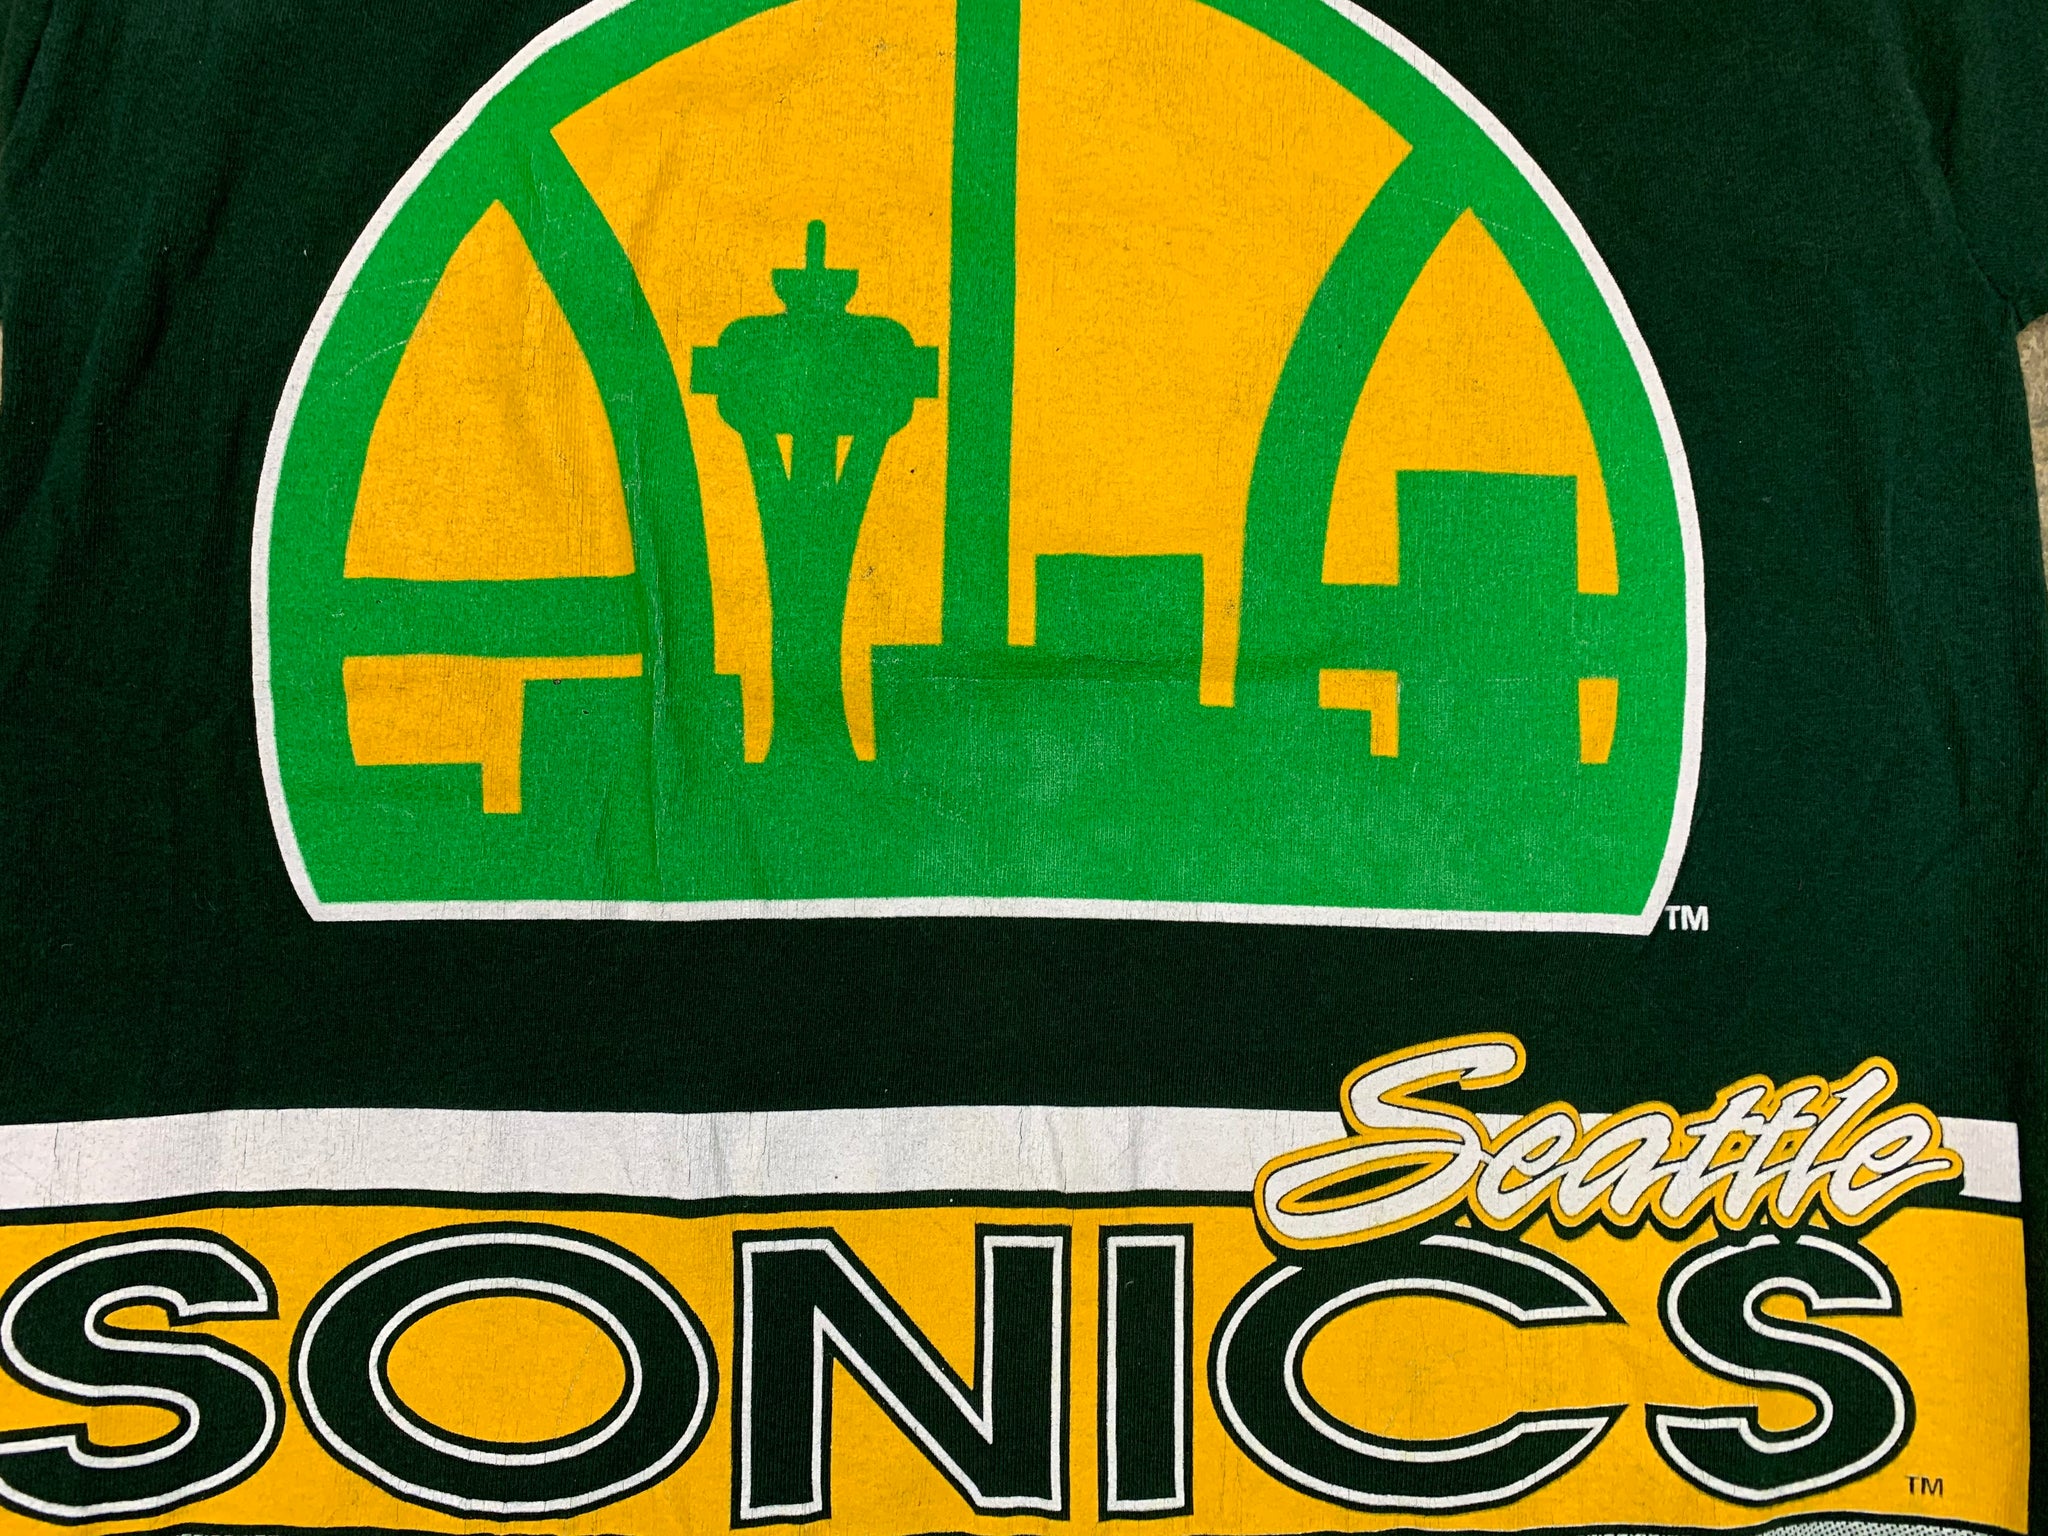 Vintage 90s Seattle Supersonics Sweatshirt Sz XL Logo Basketball hoodie  green